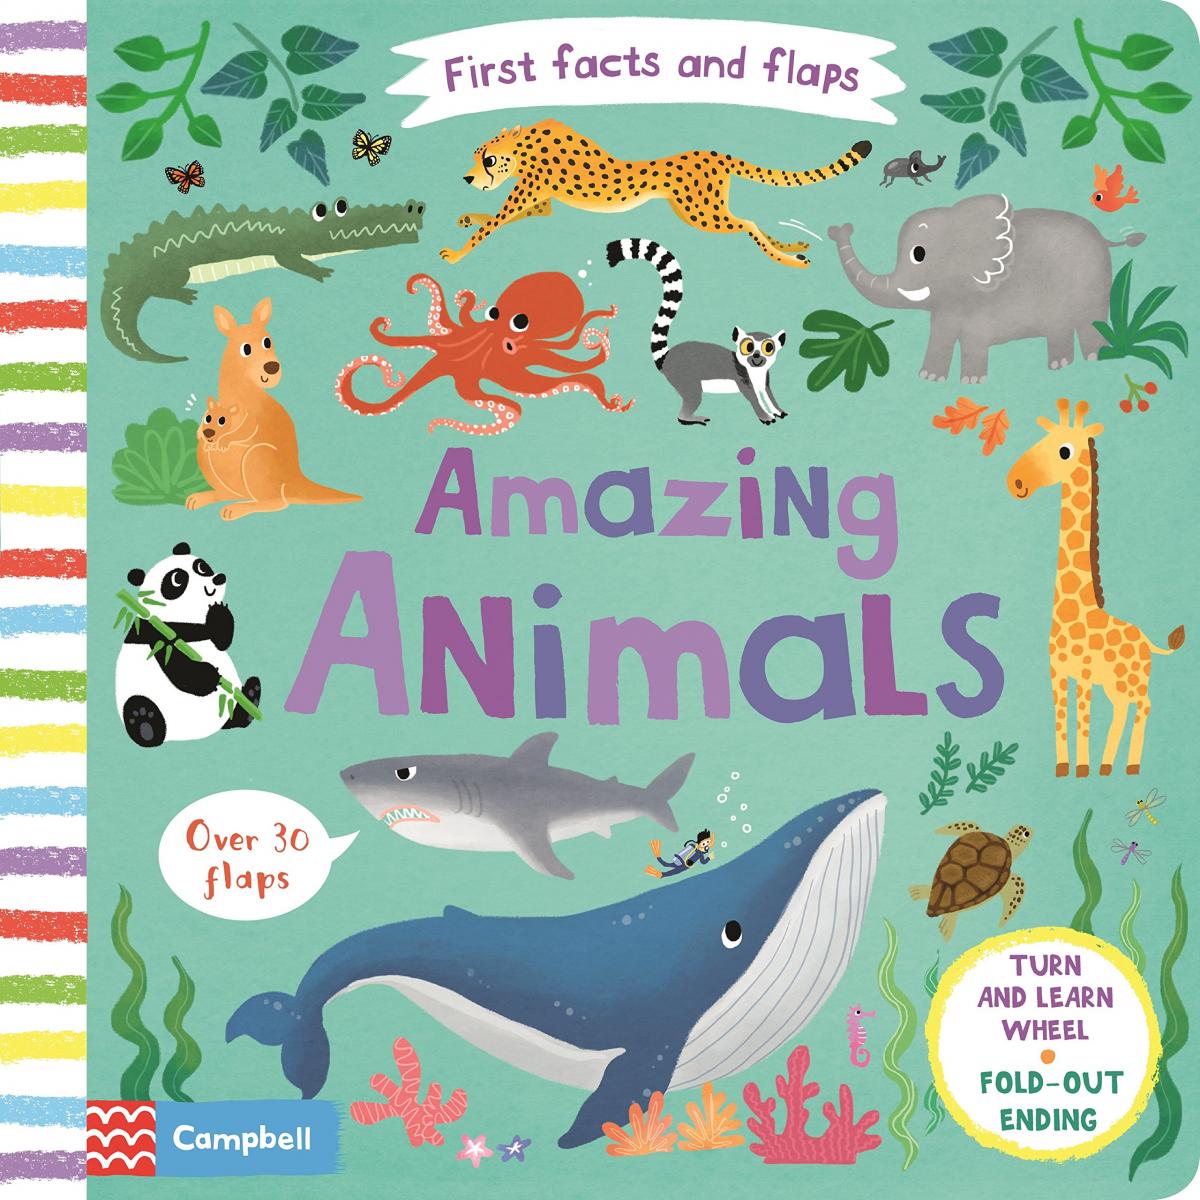 Обложка книги с животными. The animals обложка. Обложка my animals картинка. First book ru